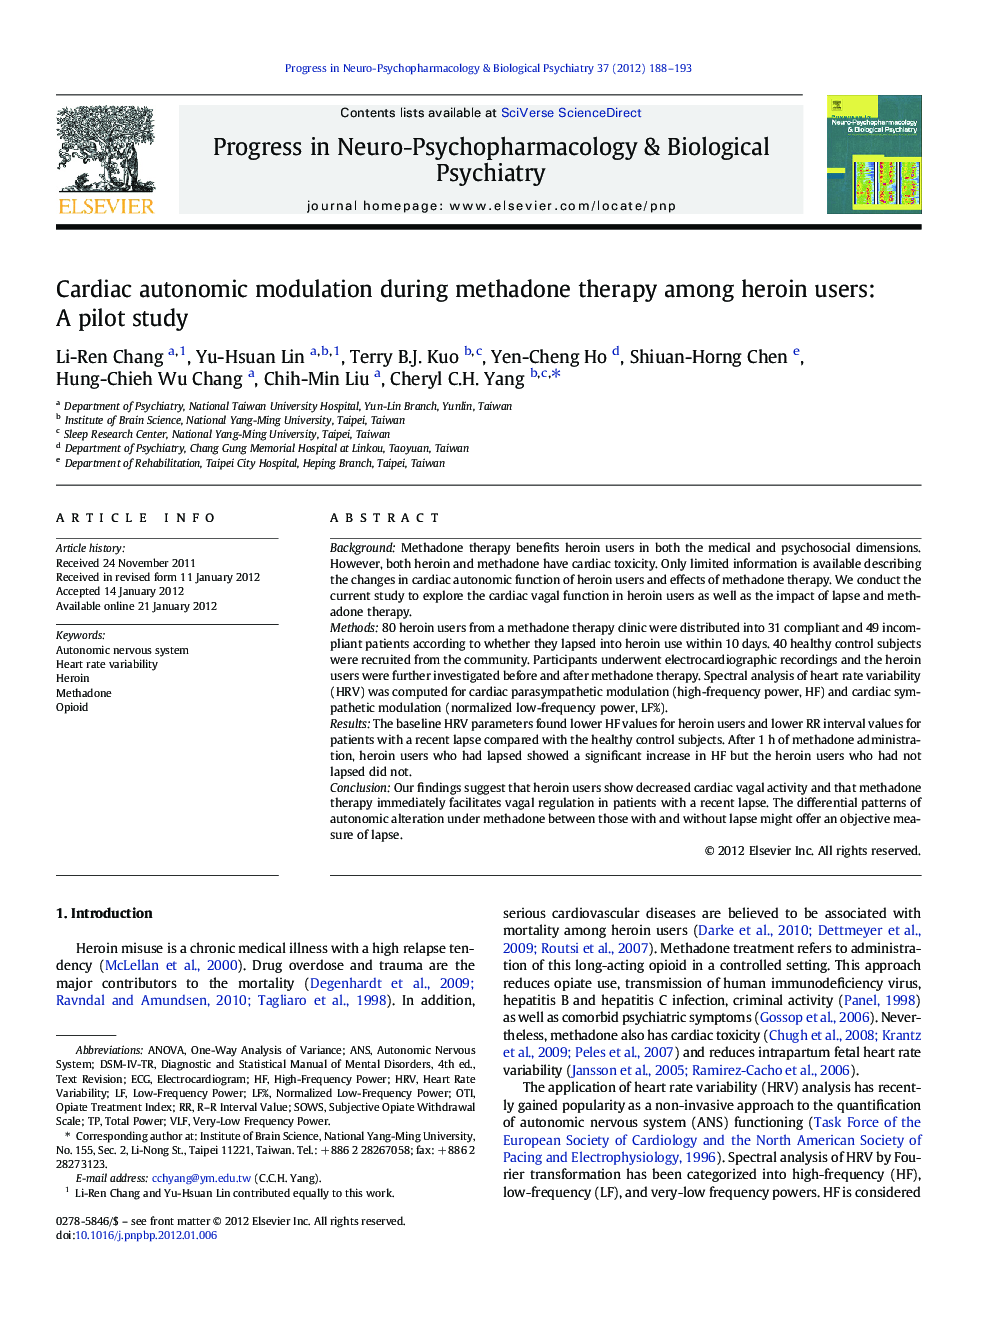 Cardiac autonomic modulation during methadone therapy among heroin users: A pilot study